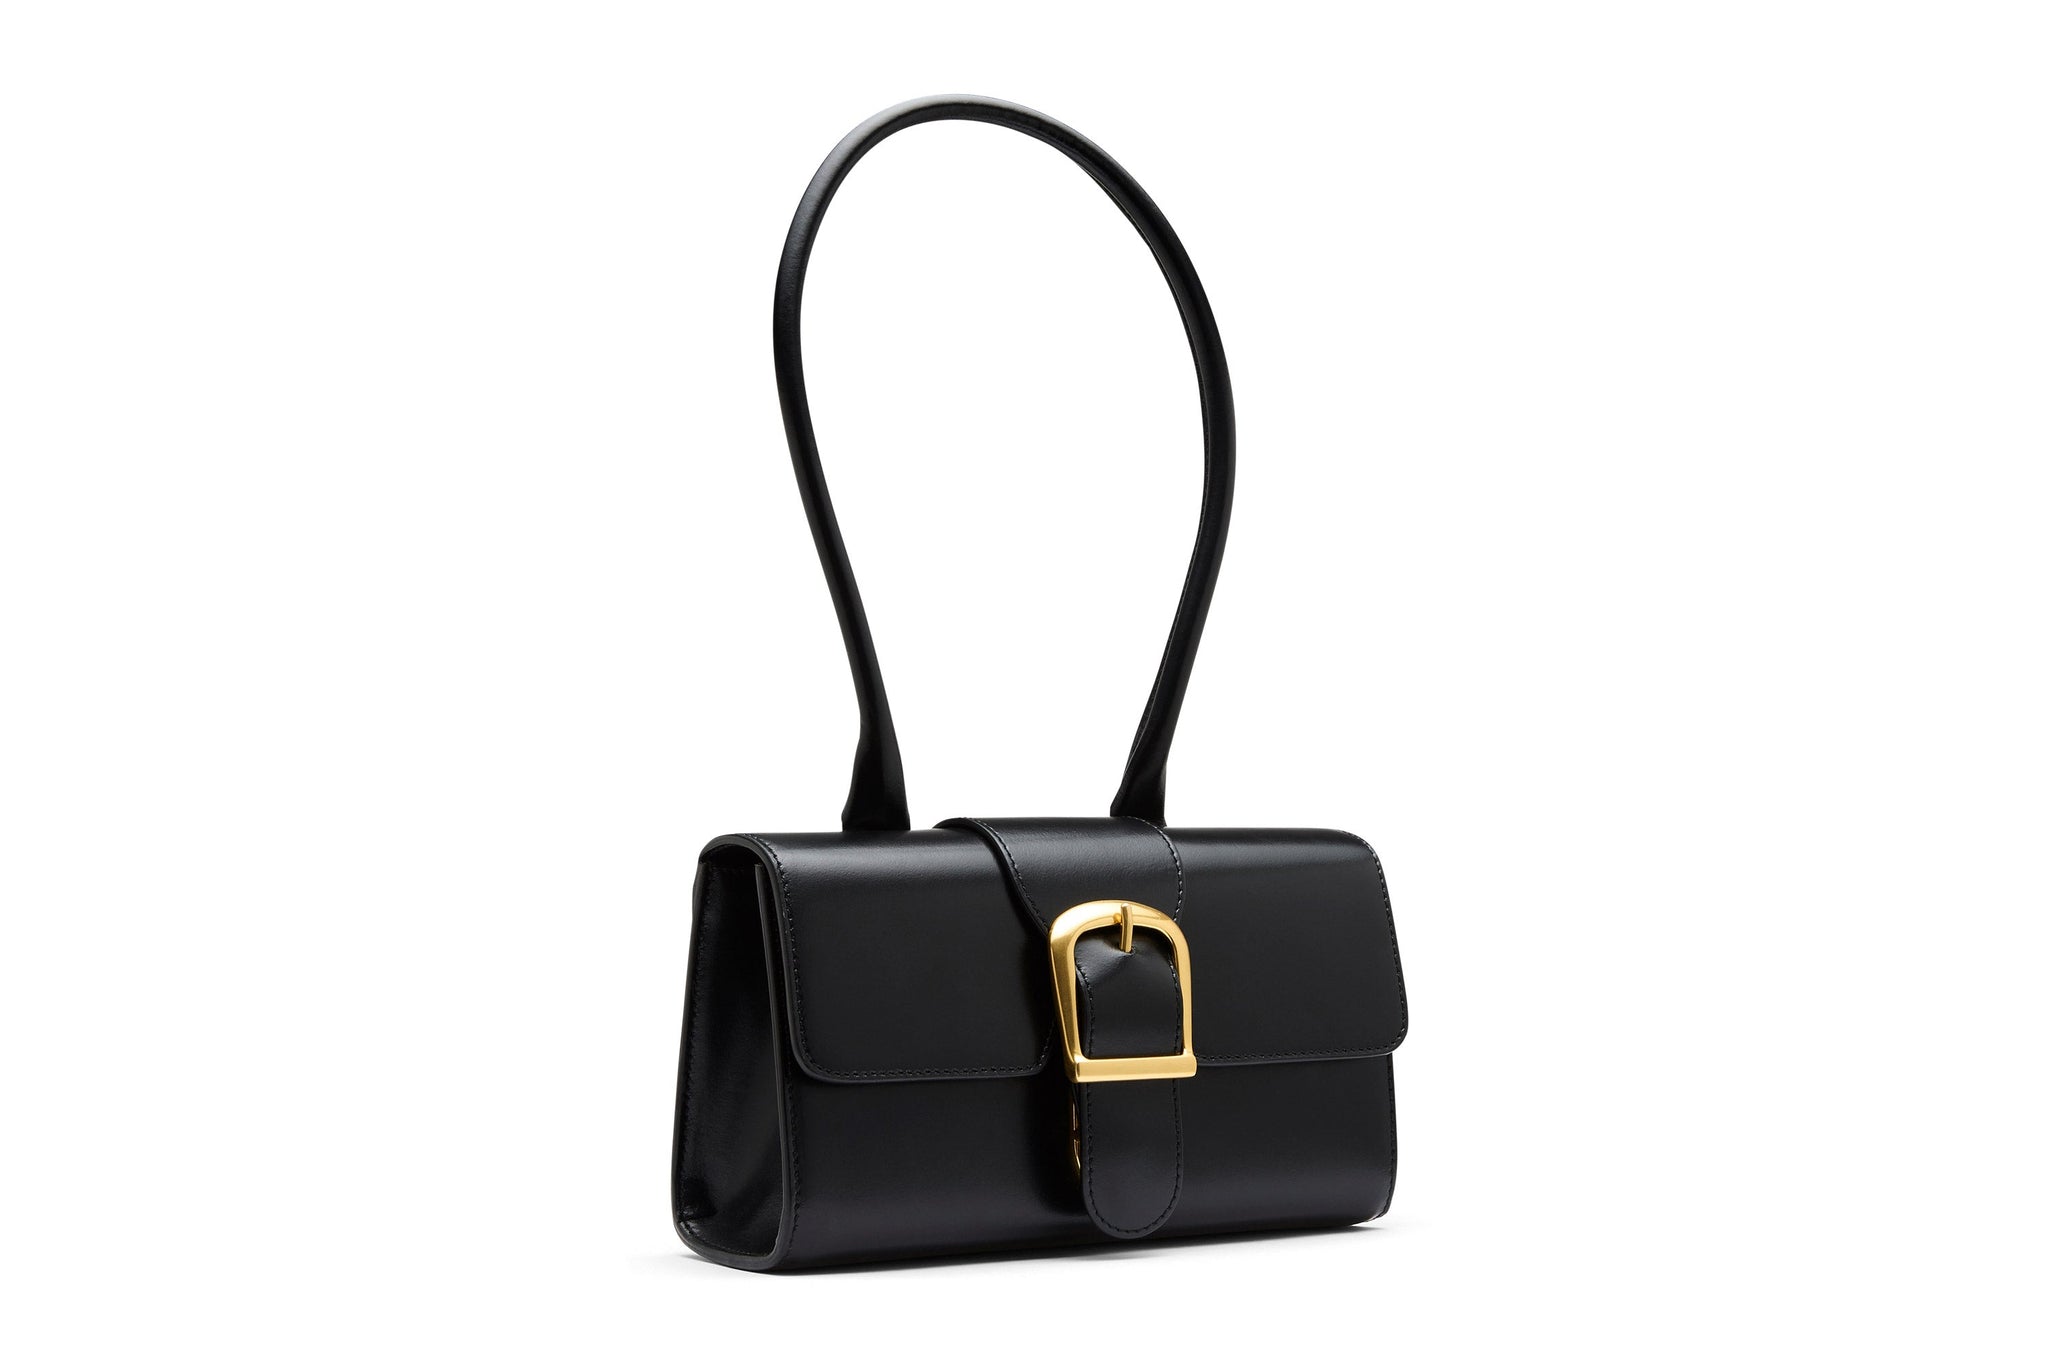 Rylan, Rylan Studio, Small Satchel with Long Handle, Black Handbag, Made in Italy, Leather Handbag